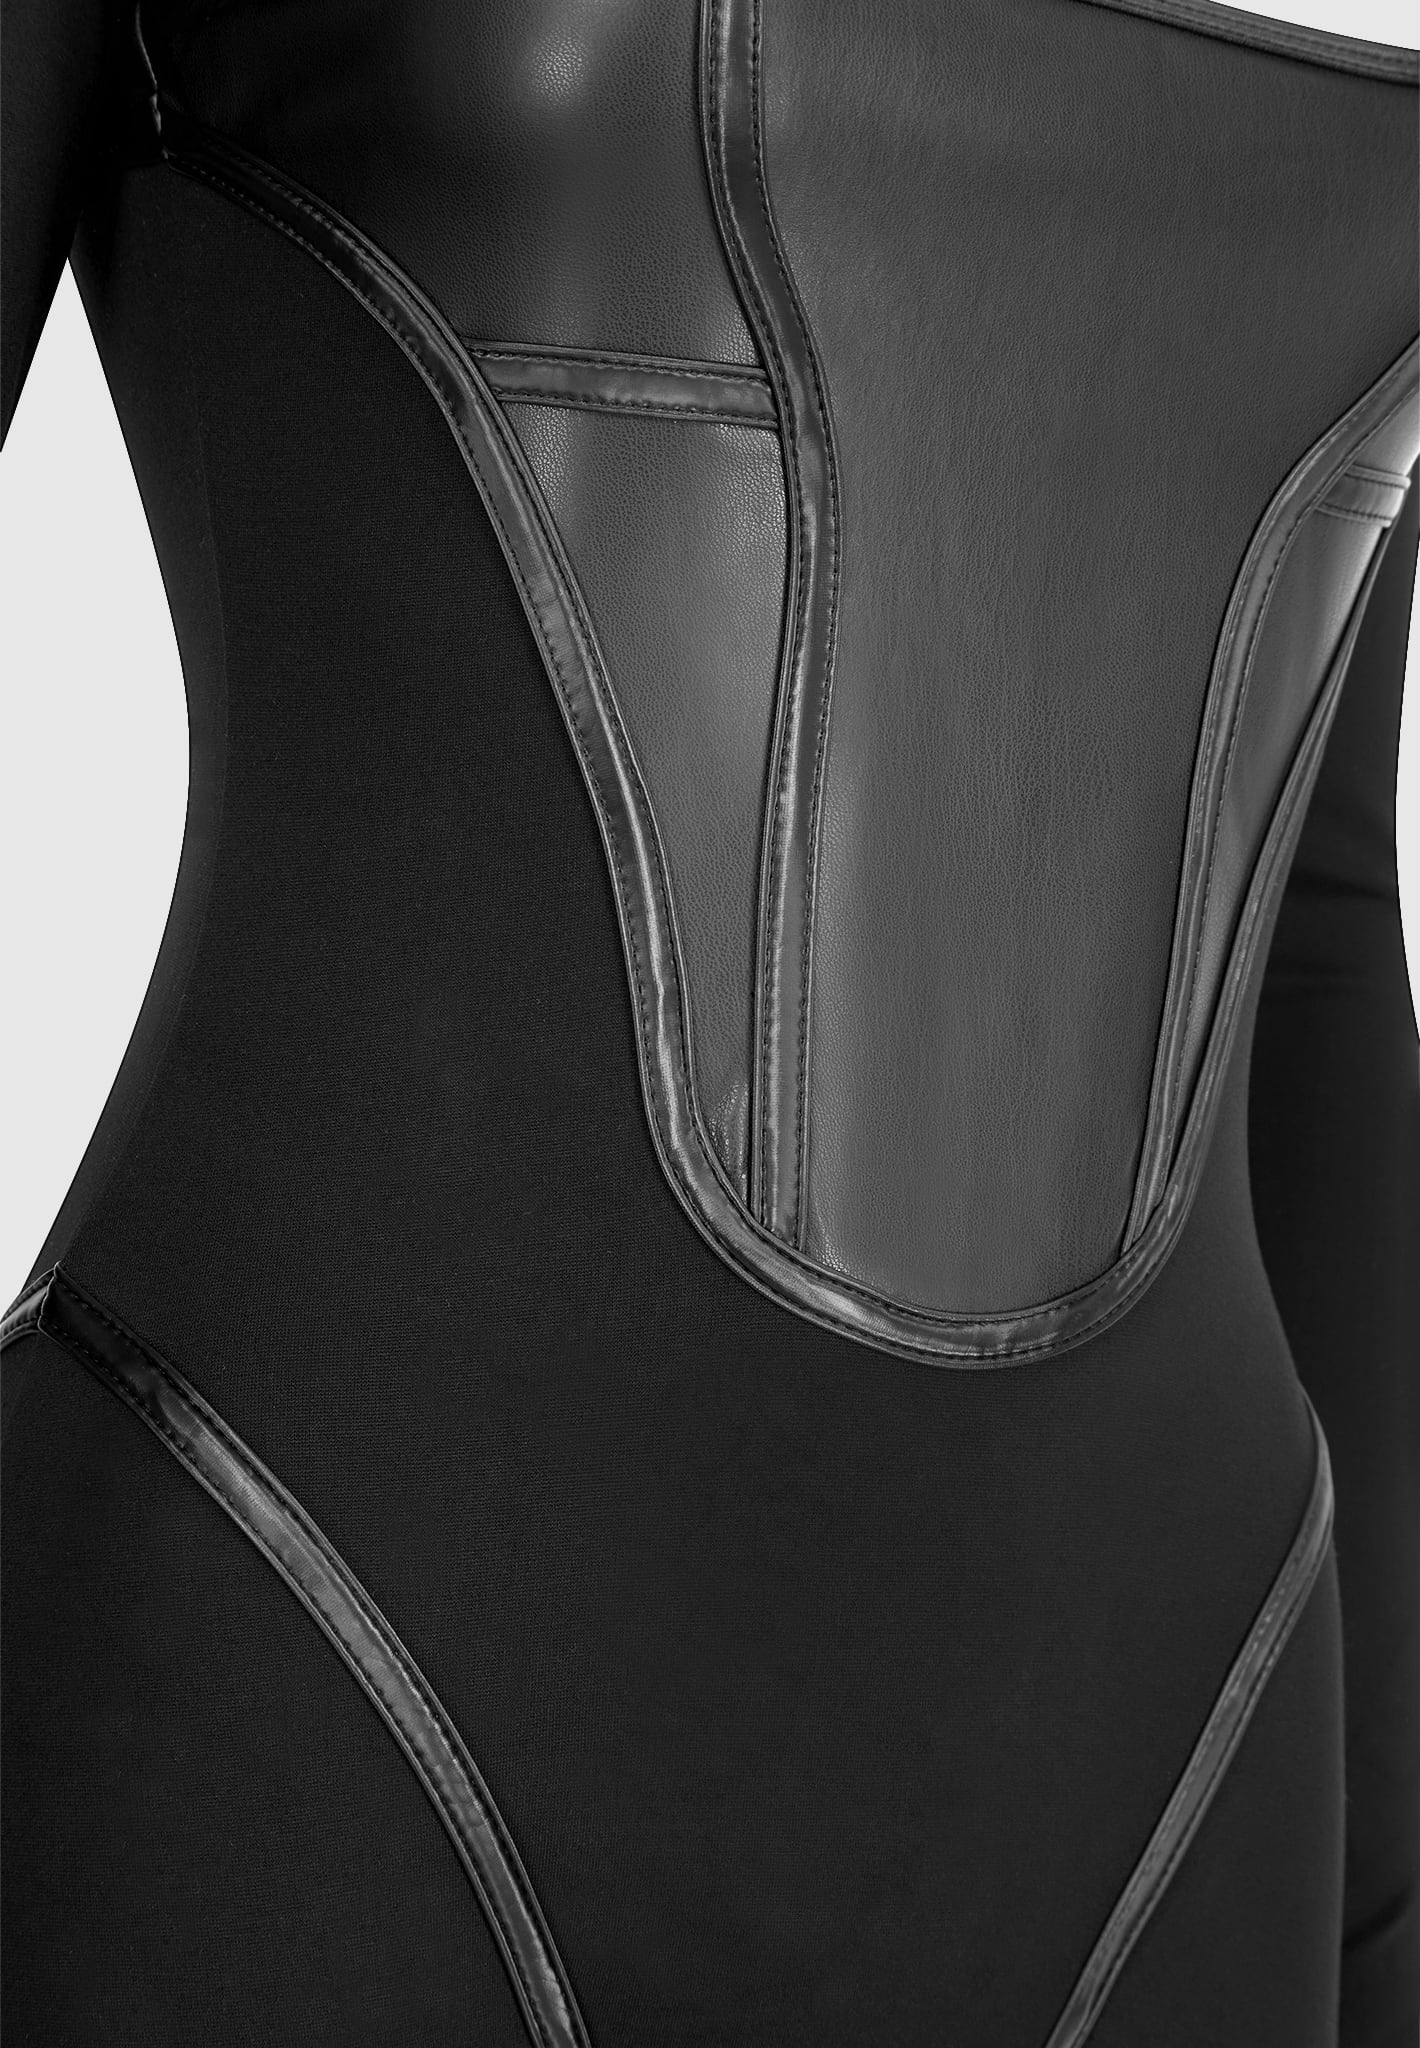 vegan-leather-and-bandage-corset-jumpsuit-black